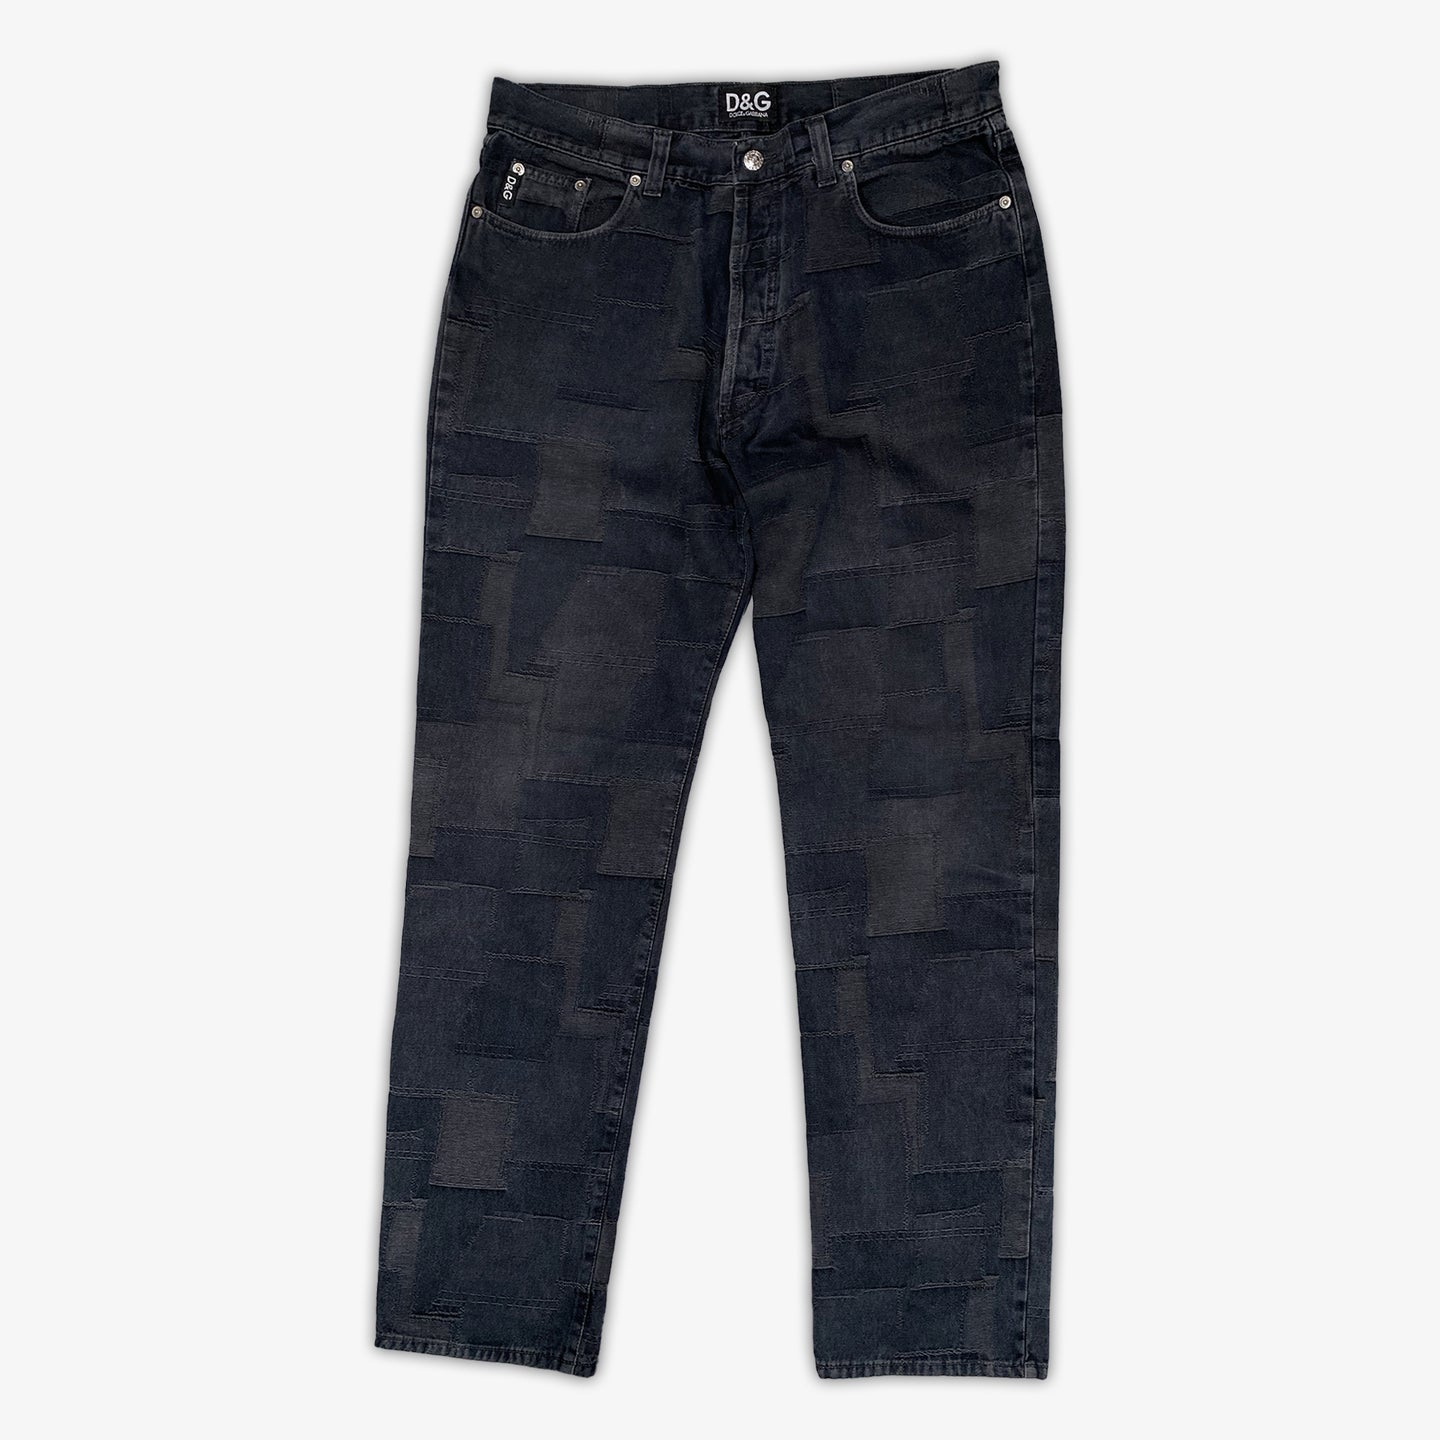 Dolce & Gabbana Patchwork Jeans (Navy)